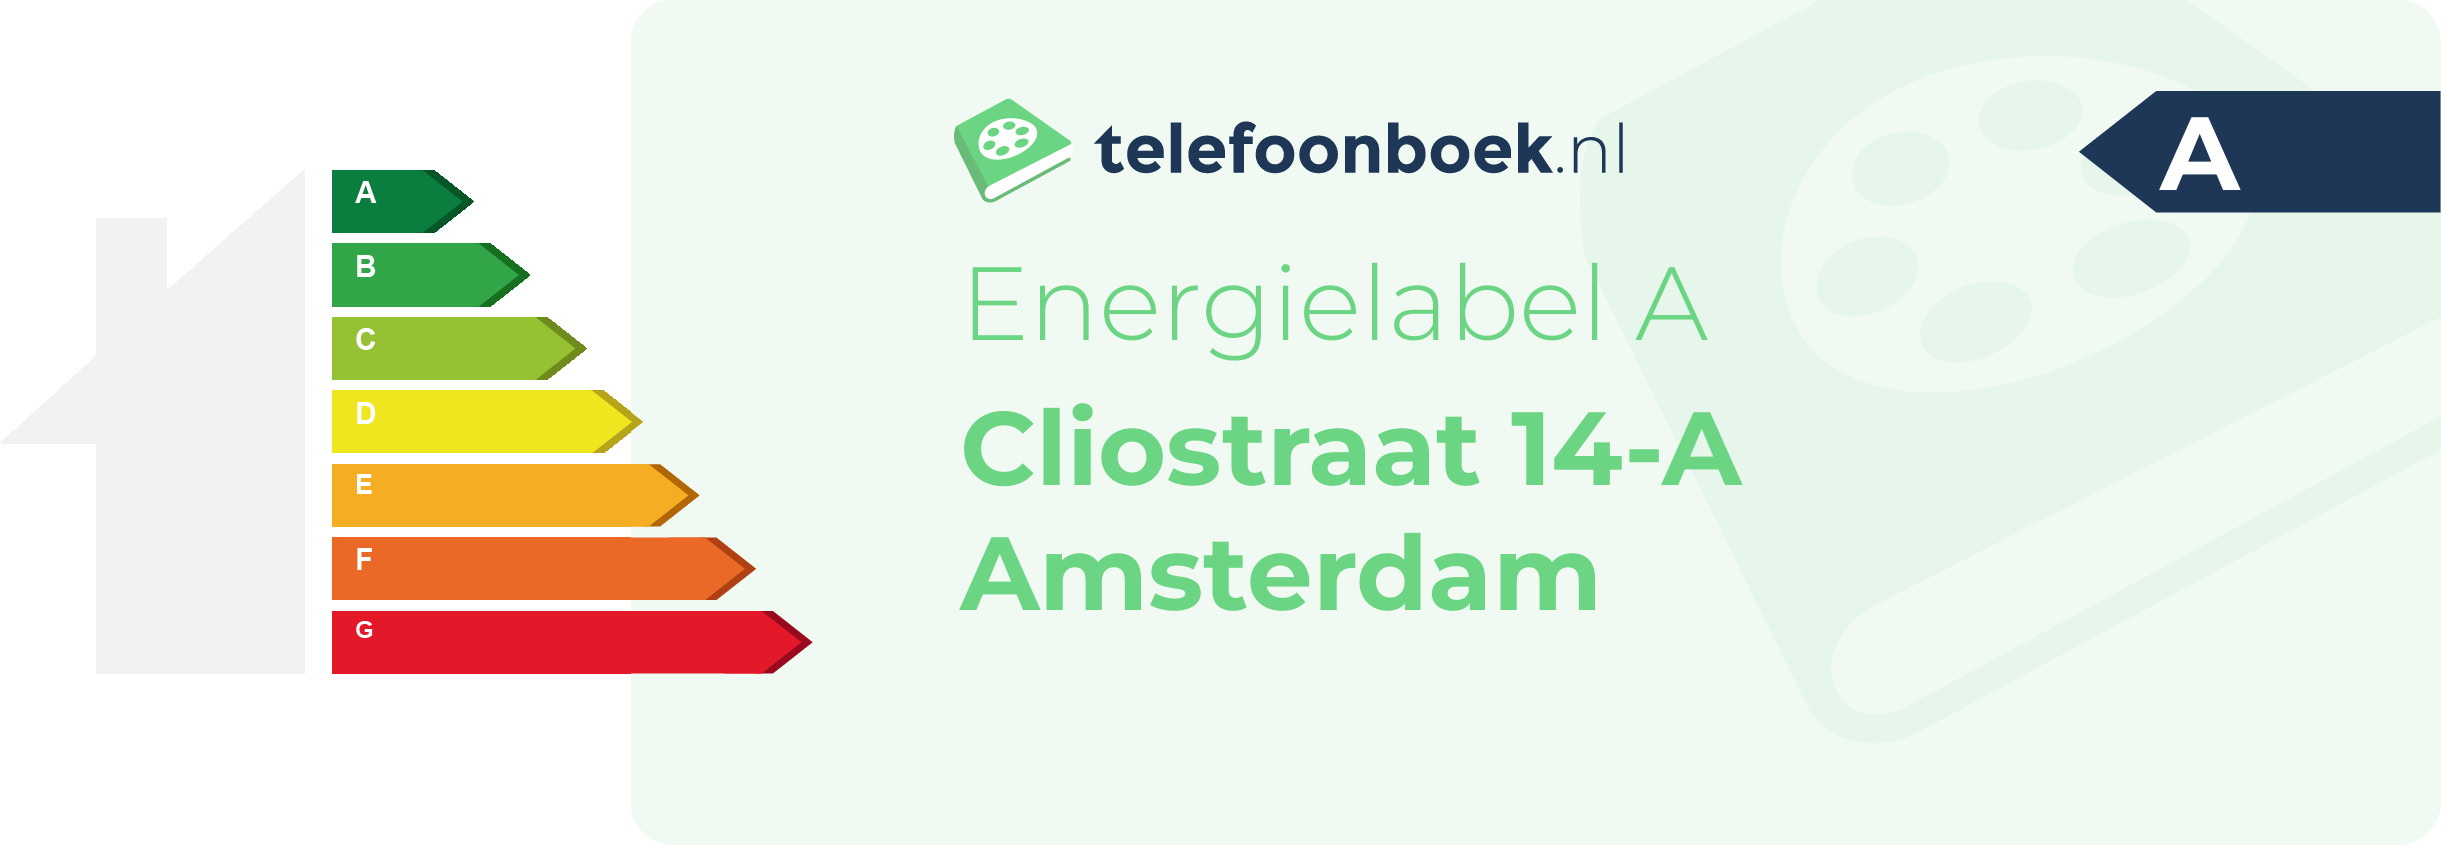 Energielabel Cliostraat 14-A Amsterdam